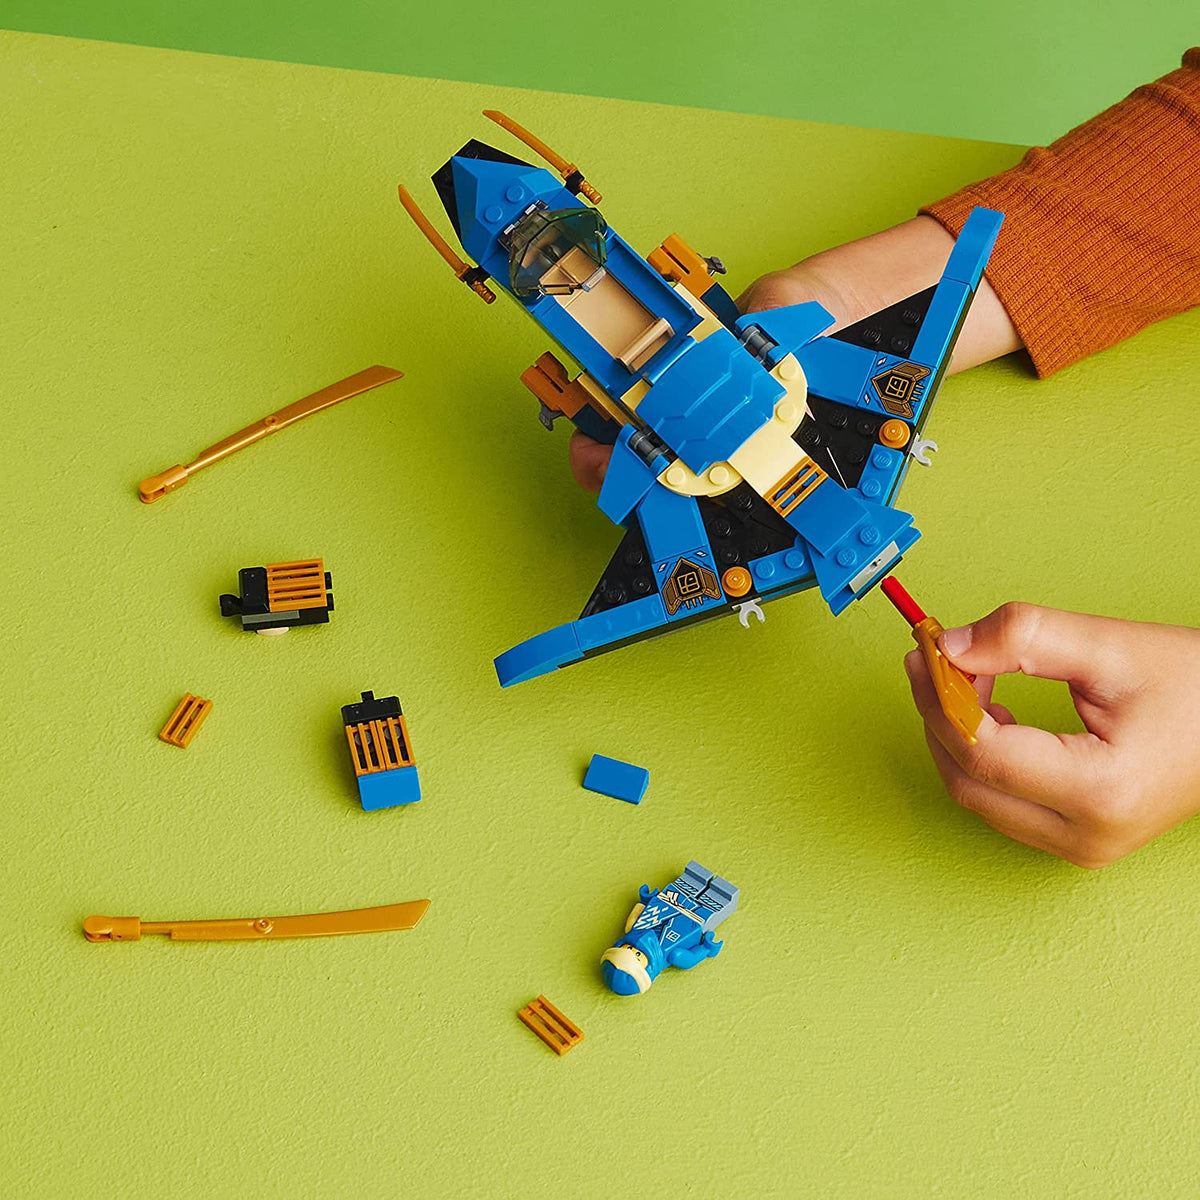 Lego Ninjago 71784 Jays Lightning Jet Evo